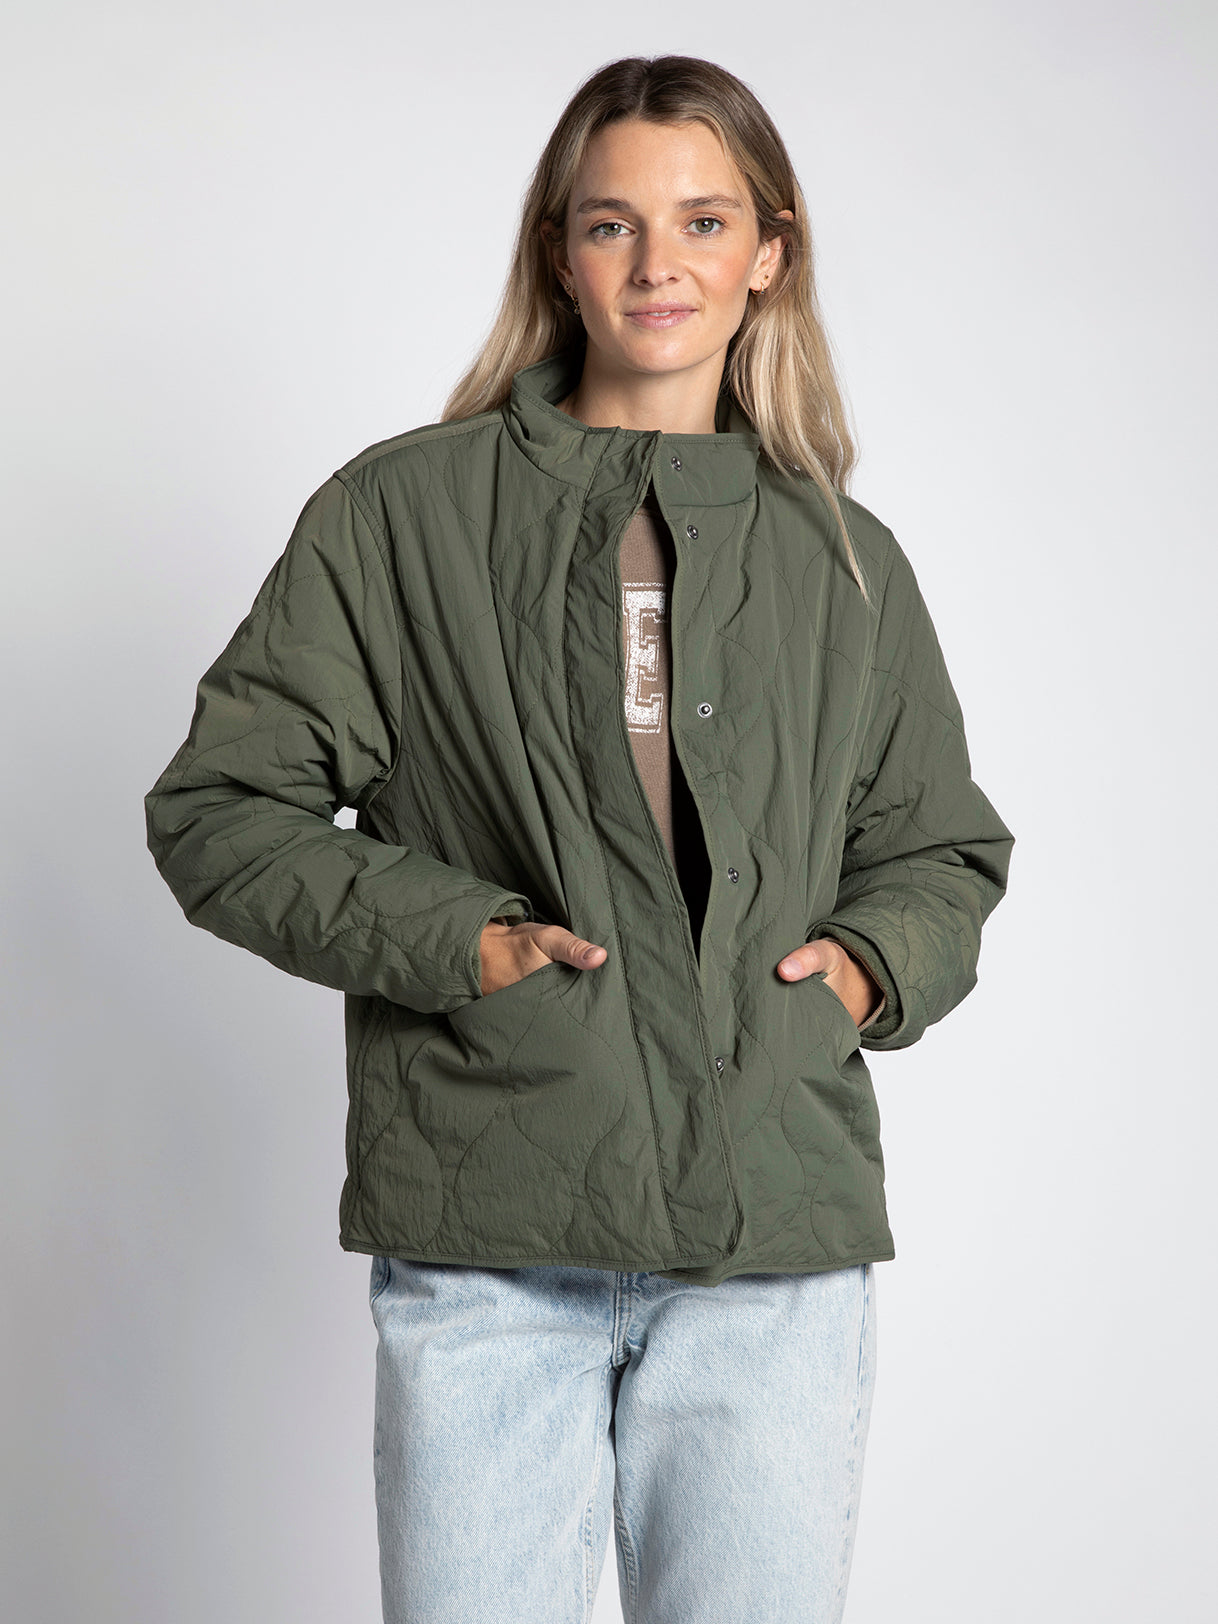 Thread & Supply Brenna Jacket for Women in Green